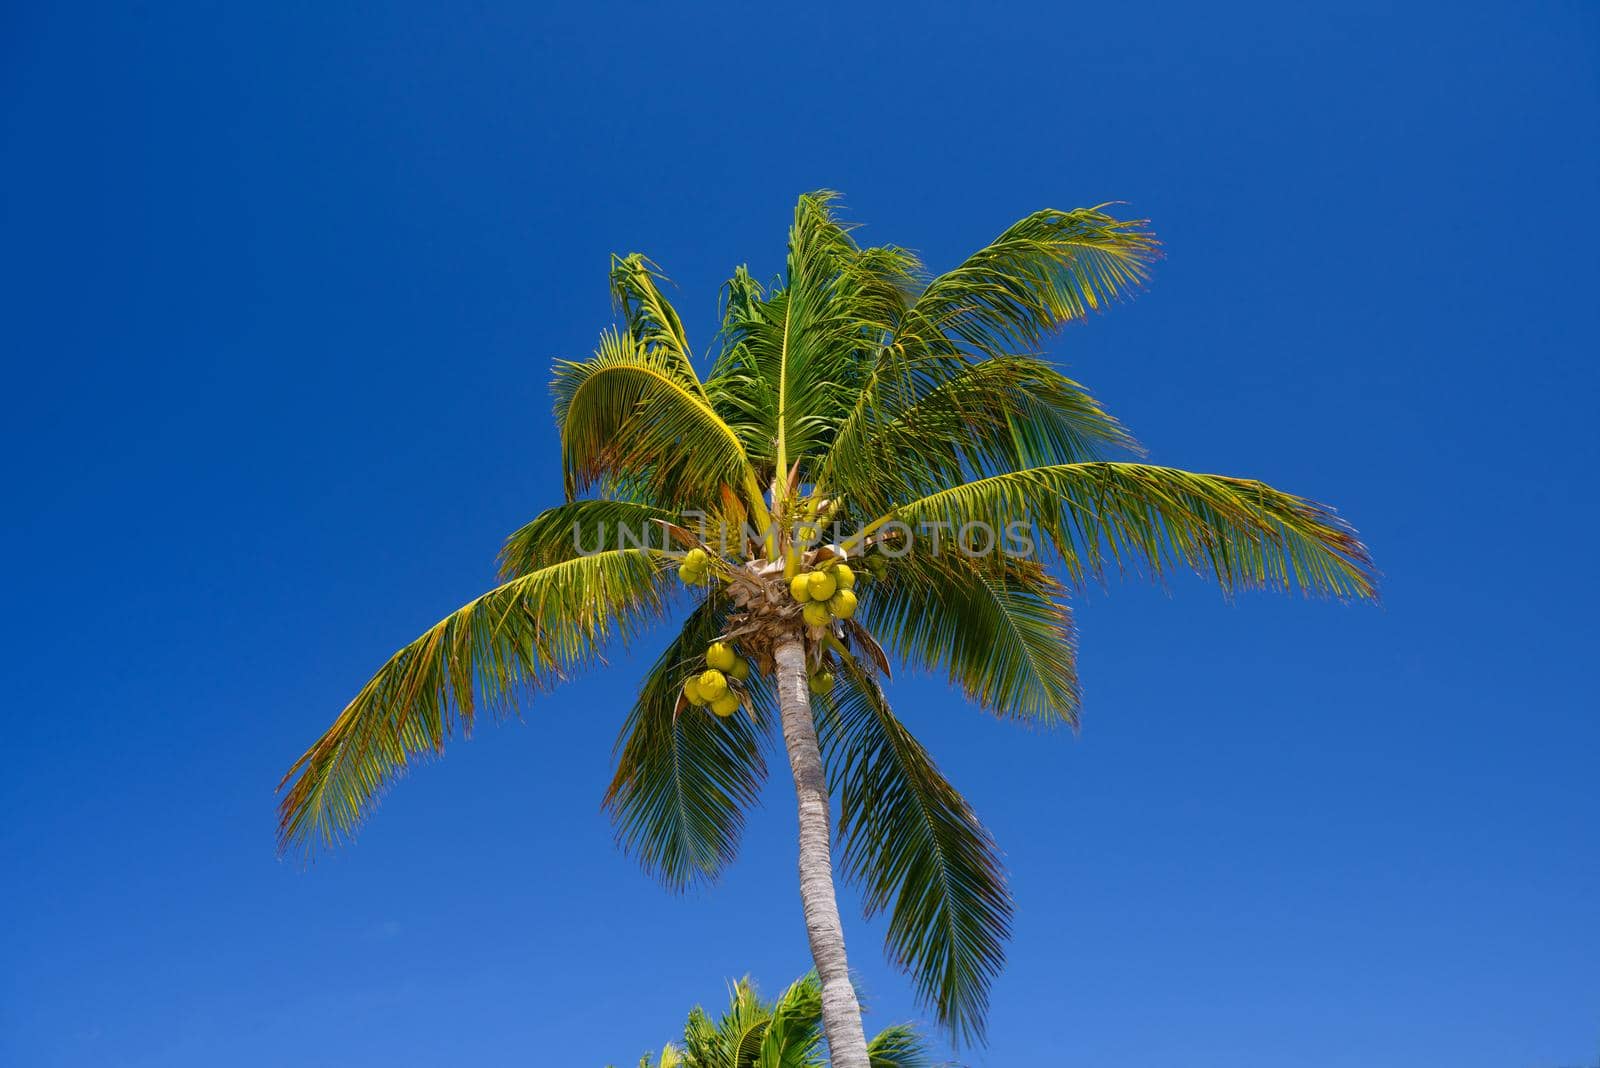 Cocos palm with cocos nuts in Playa del Carmen, Mexico by Eagle2308